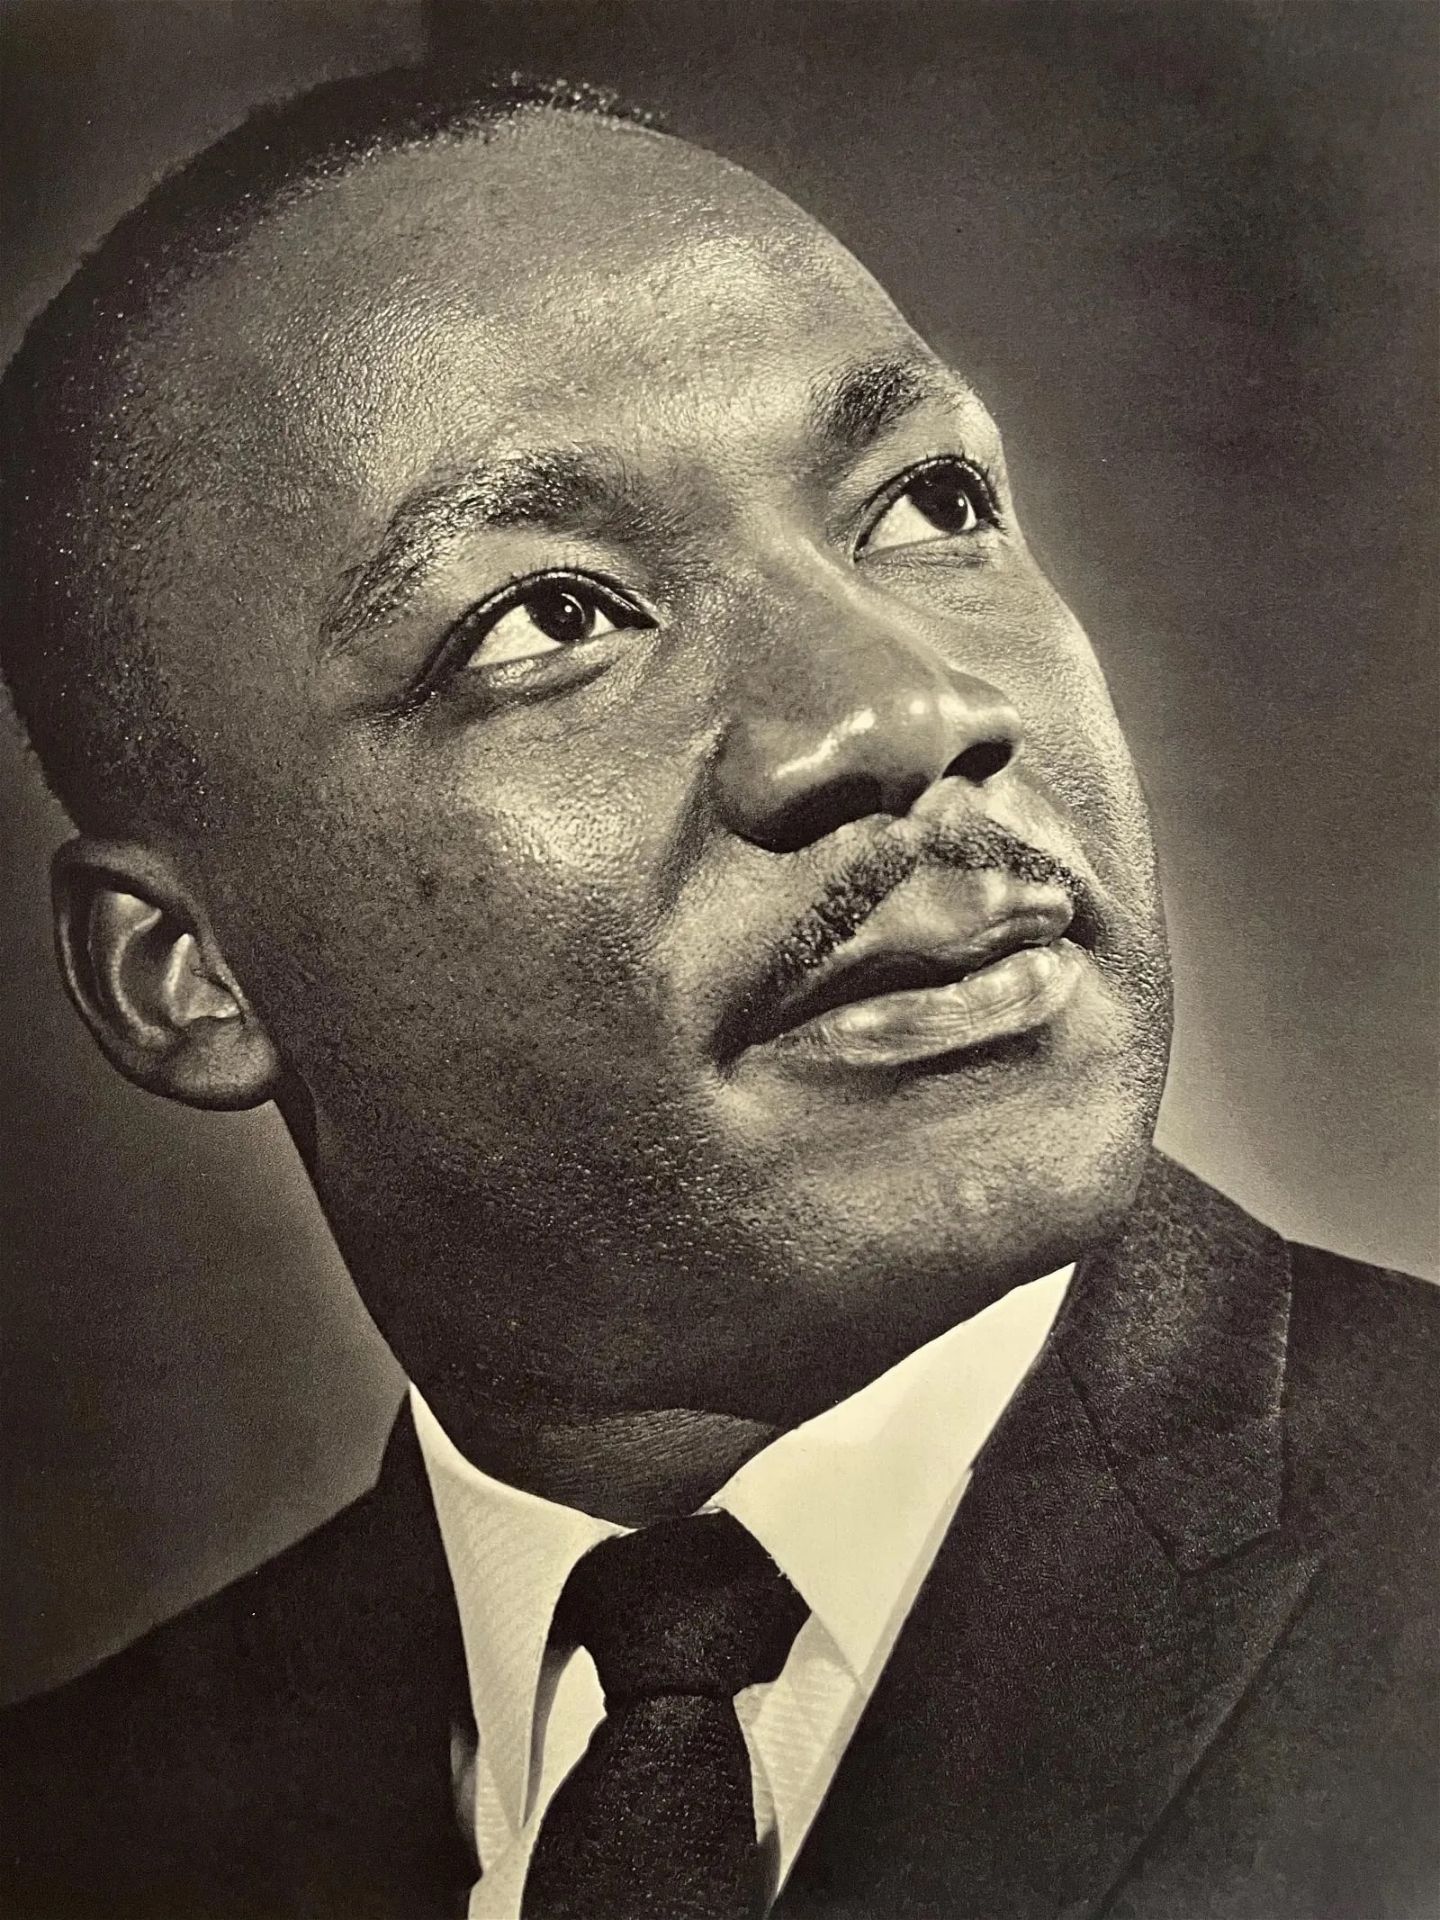 Yousuf Karsh "Martin Luther King, Jr" Print
